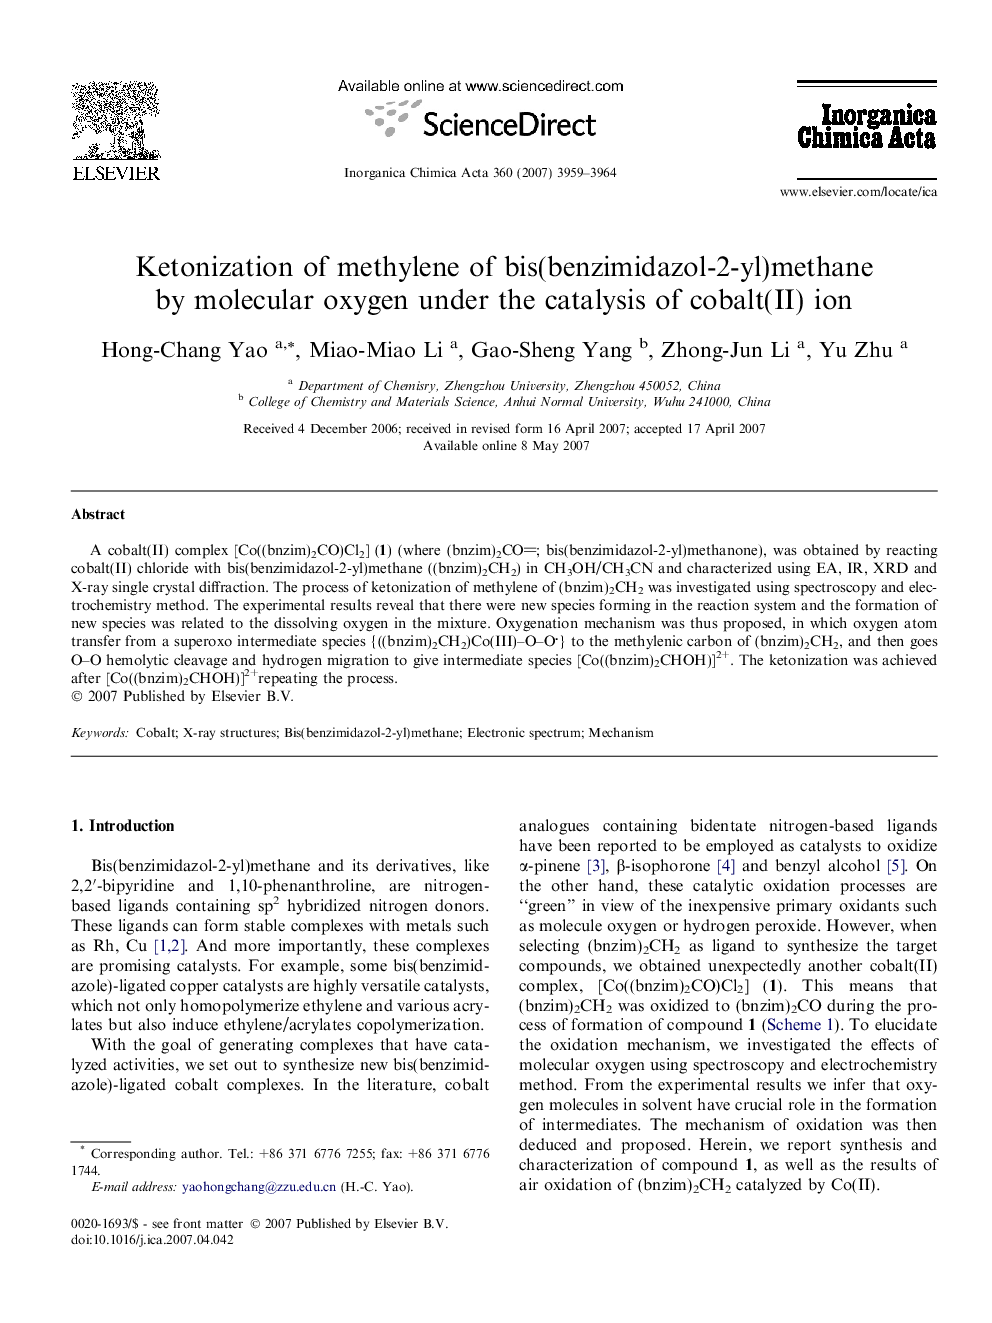 Ketonization of methylene of bis(benzimidazol-2-yl)methane by molecular oxygen under the catalysis of cobalt(II) ion